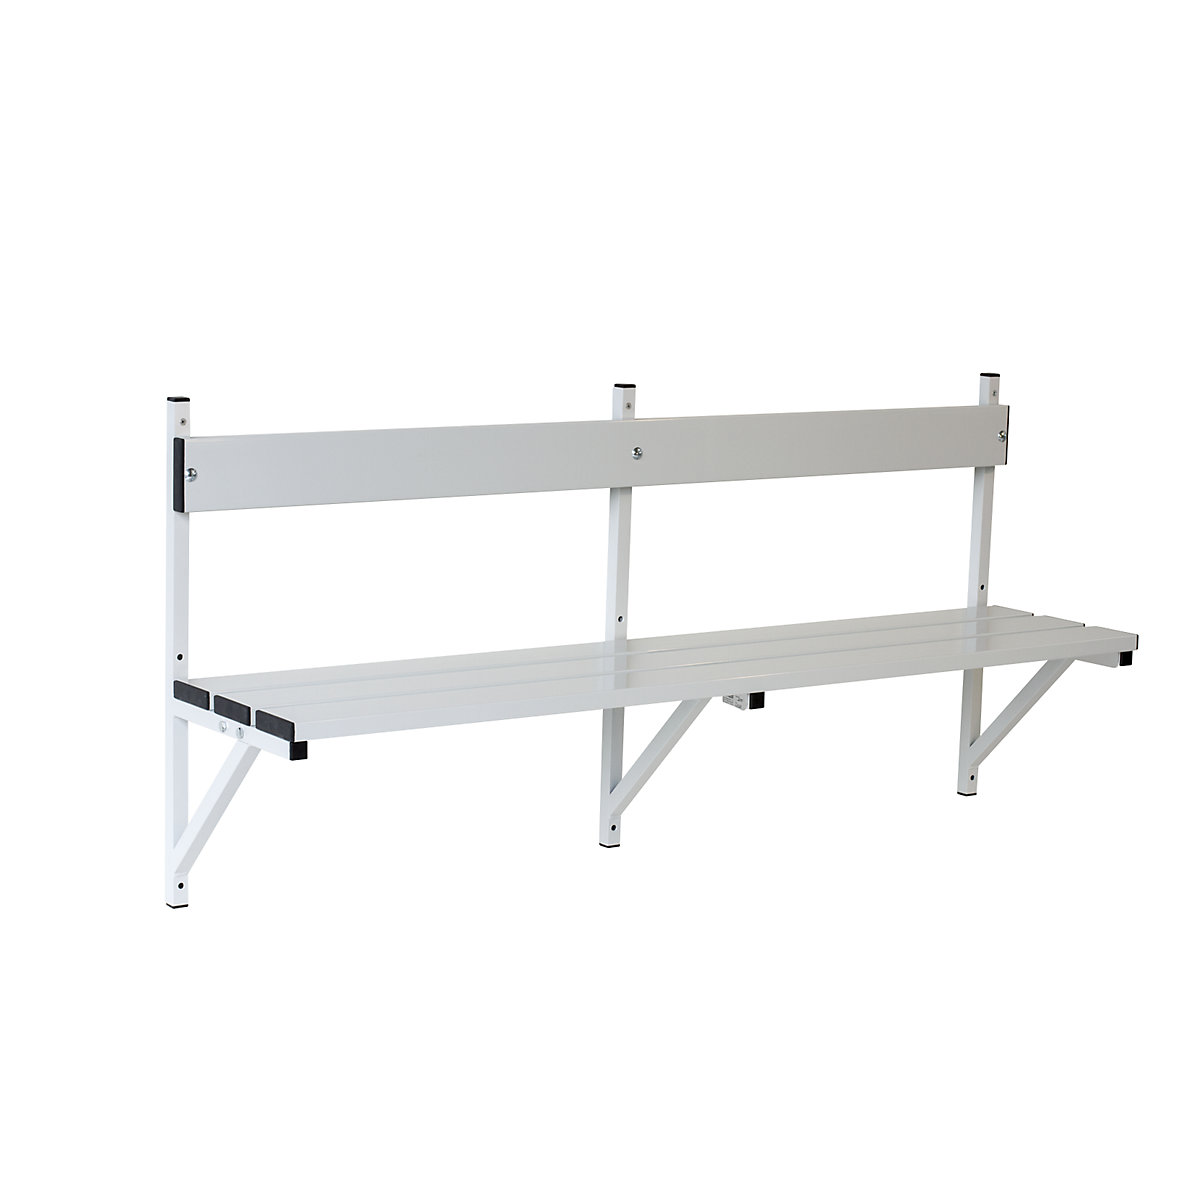 Sypro – Wall mounted bench, aluminium slats/stainless steel frame, length 1500 mm, light grey